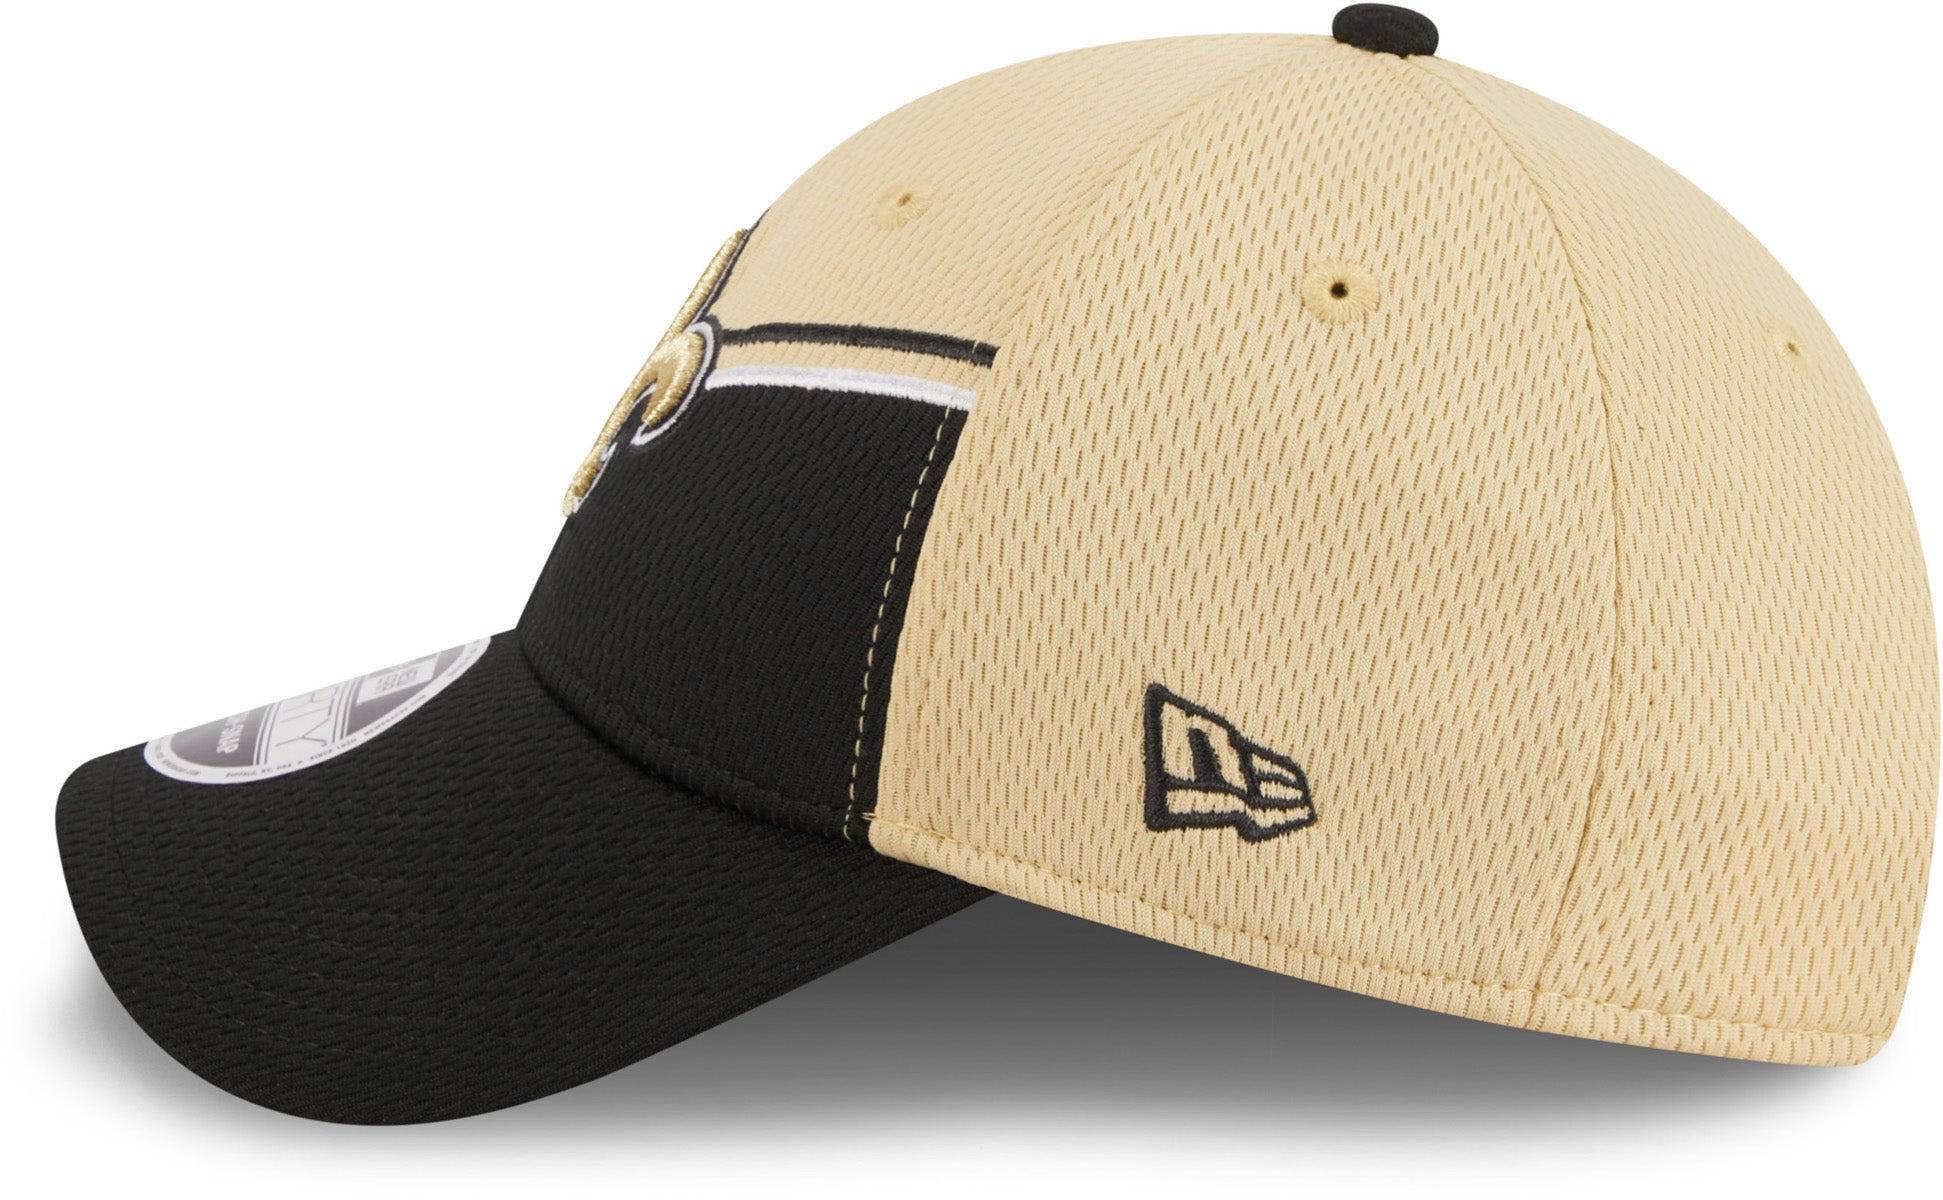 New Orleans Saints NFL New Era Stretch Fit Hat